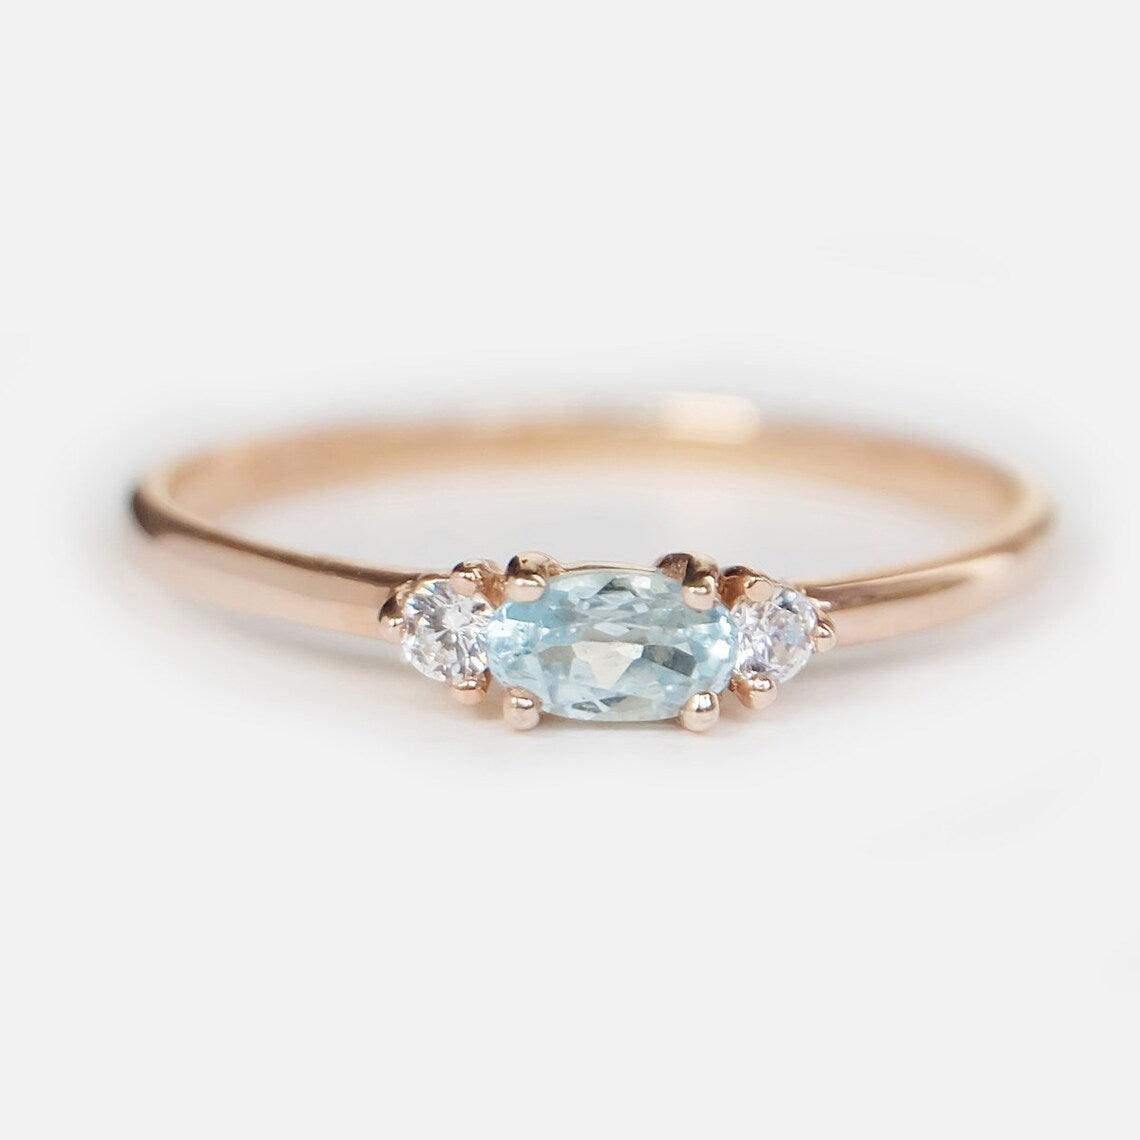 Aquamarine ring with diamonds